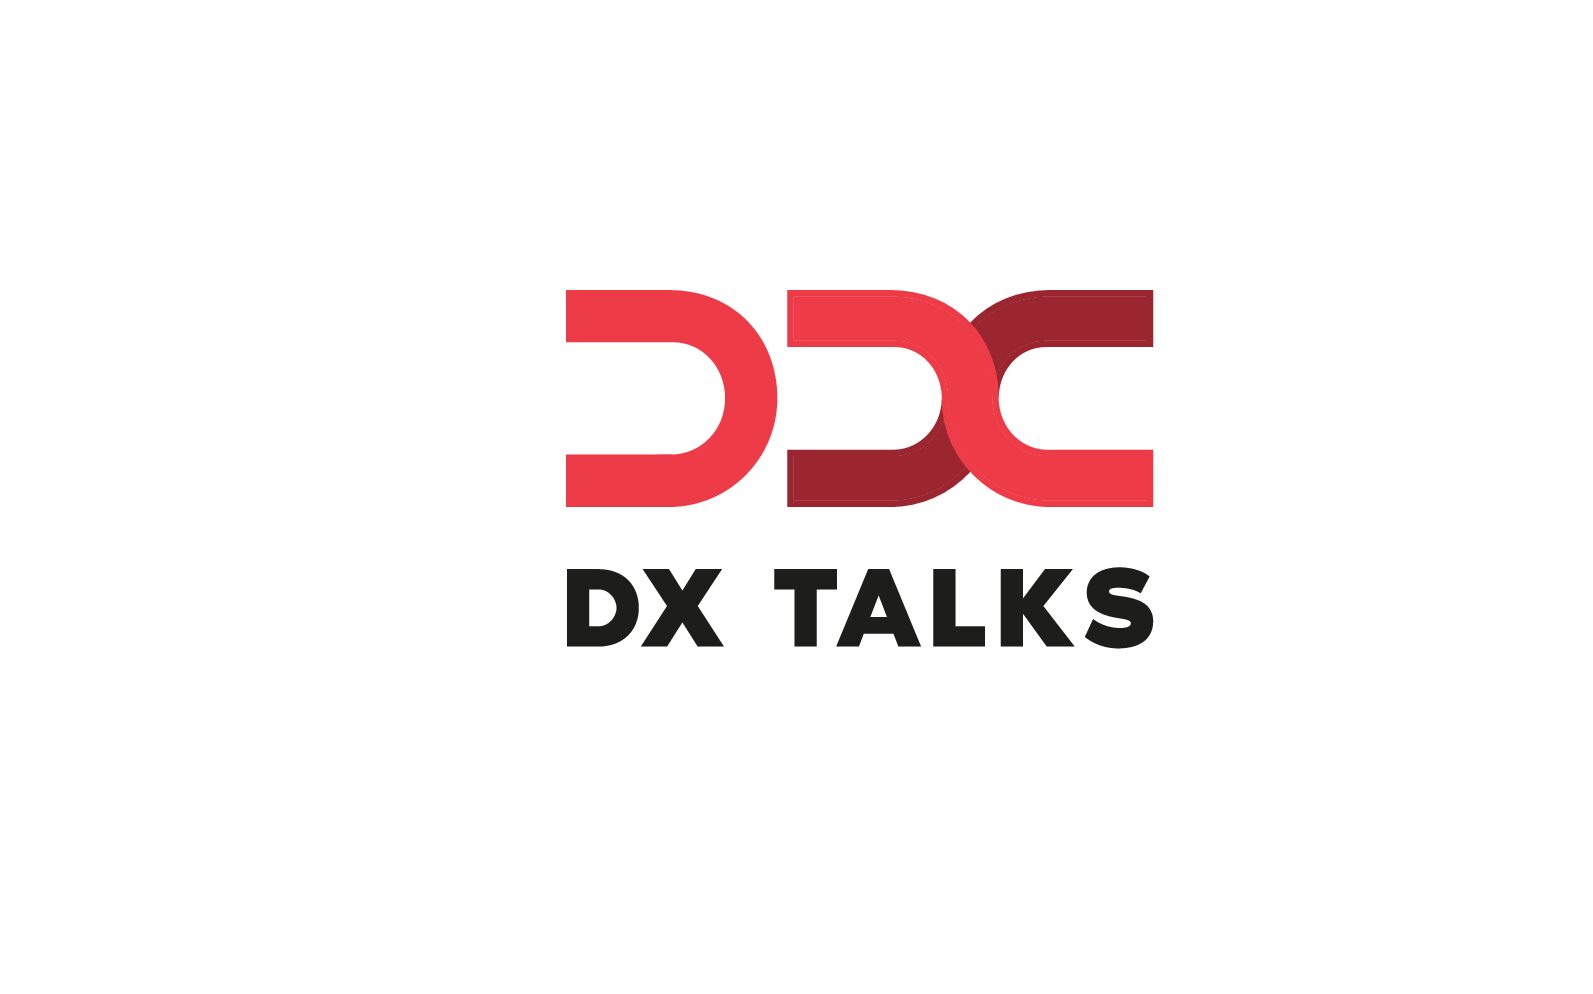 DX TALKS